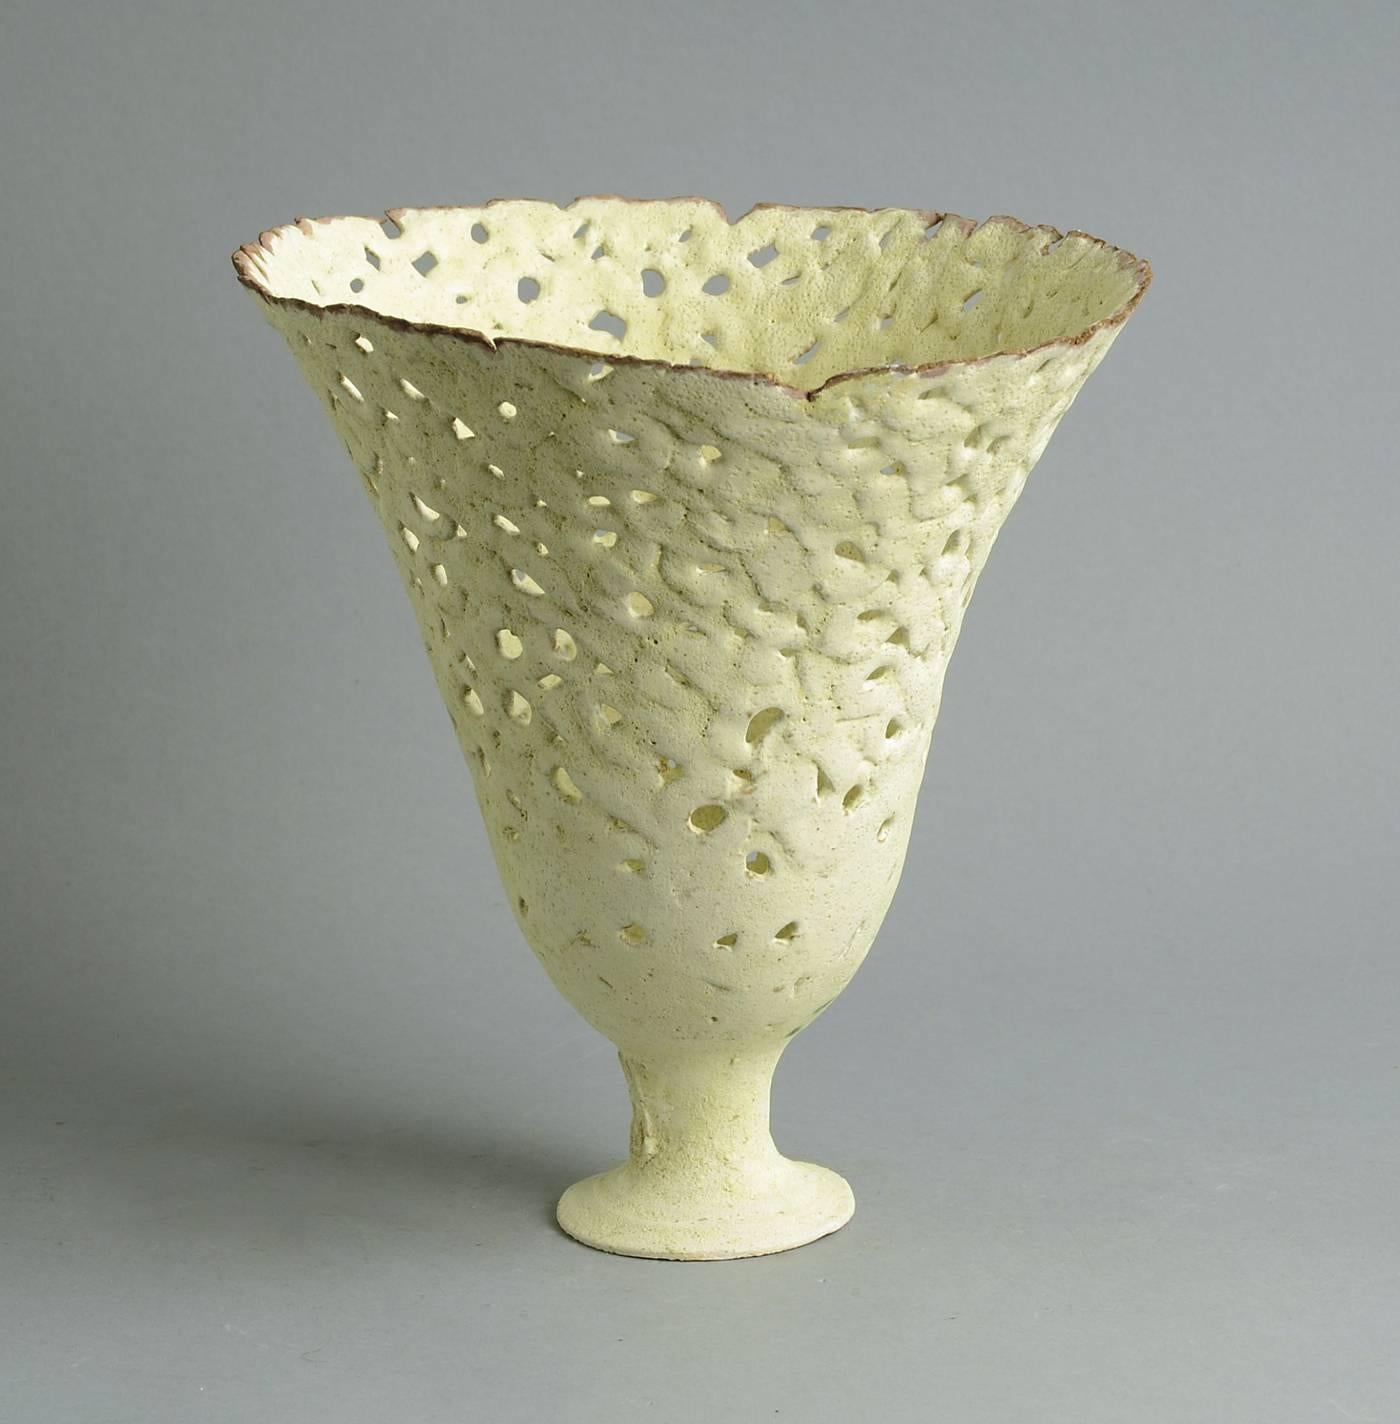 Glazed Early Unique Stoneware Vase with matte white glaze by Ursula Morley Price